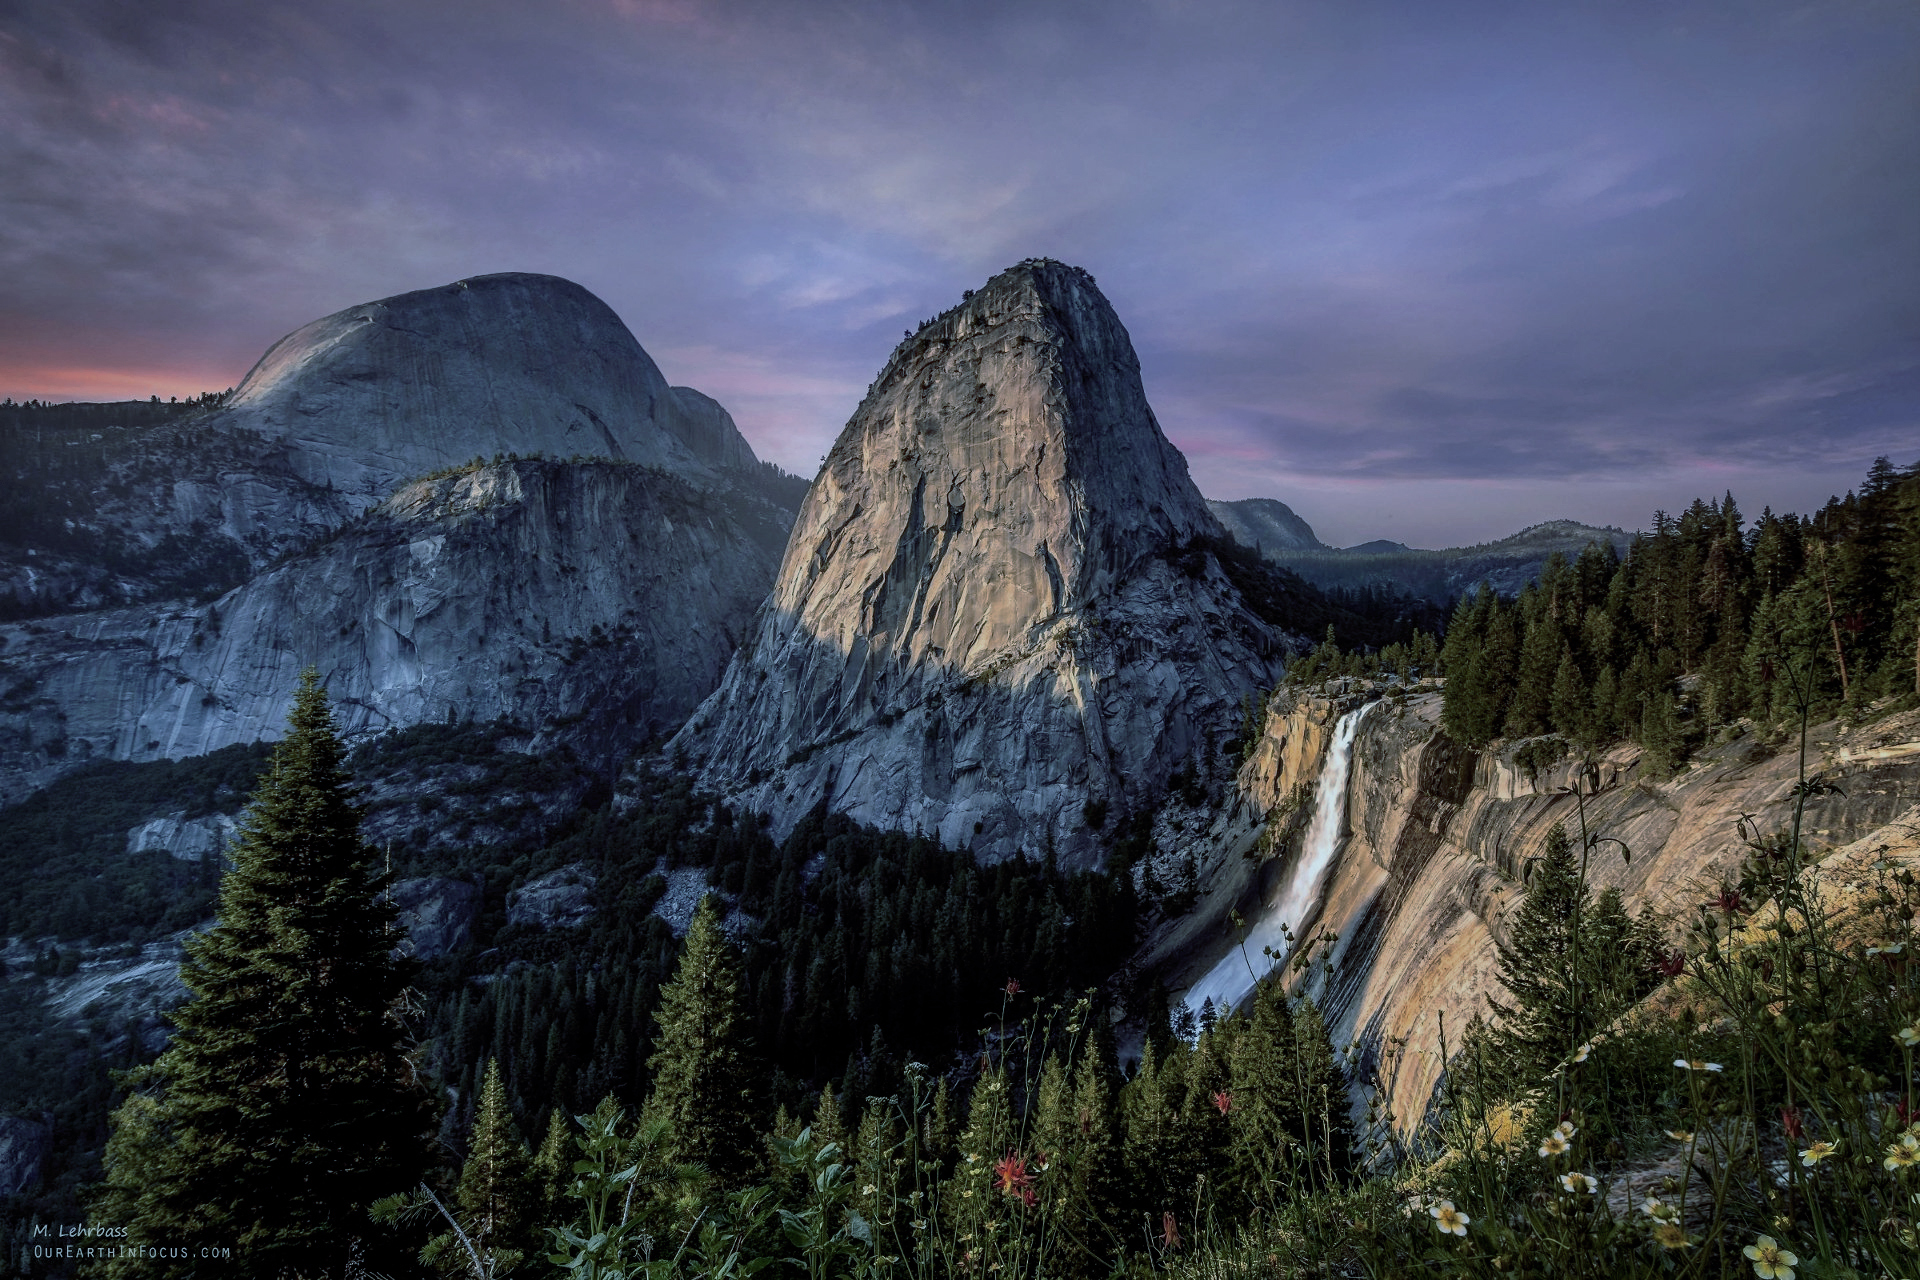 General 1920x1280 mountains trees waterfall Yosemite National Park Mark Lehrbass watermarked Half Dome California USA